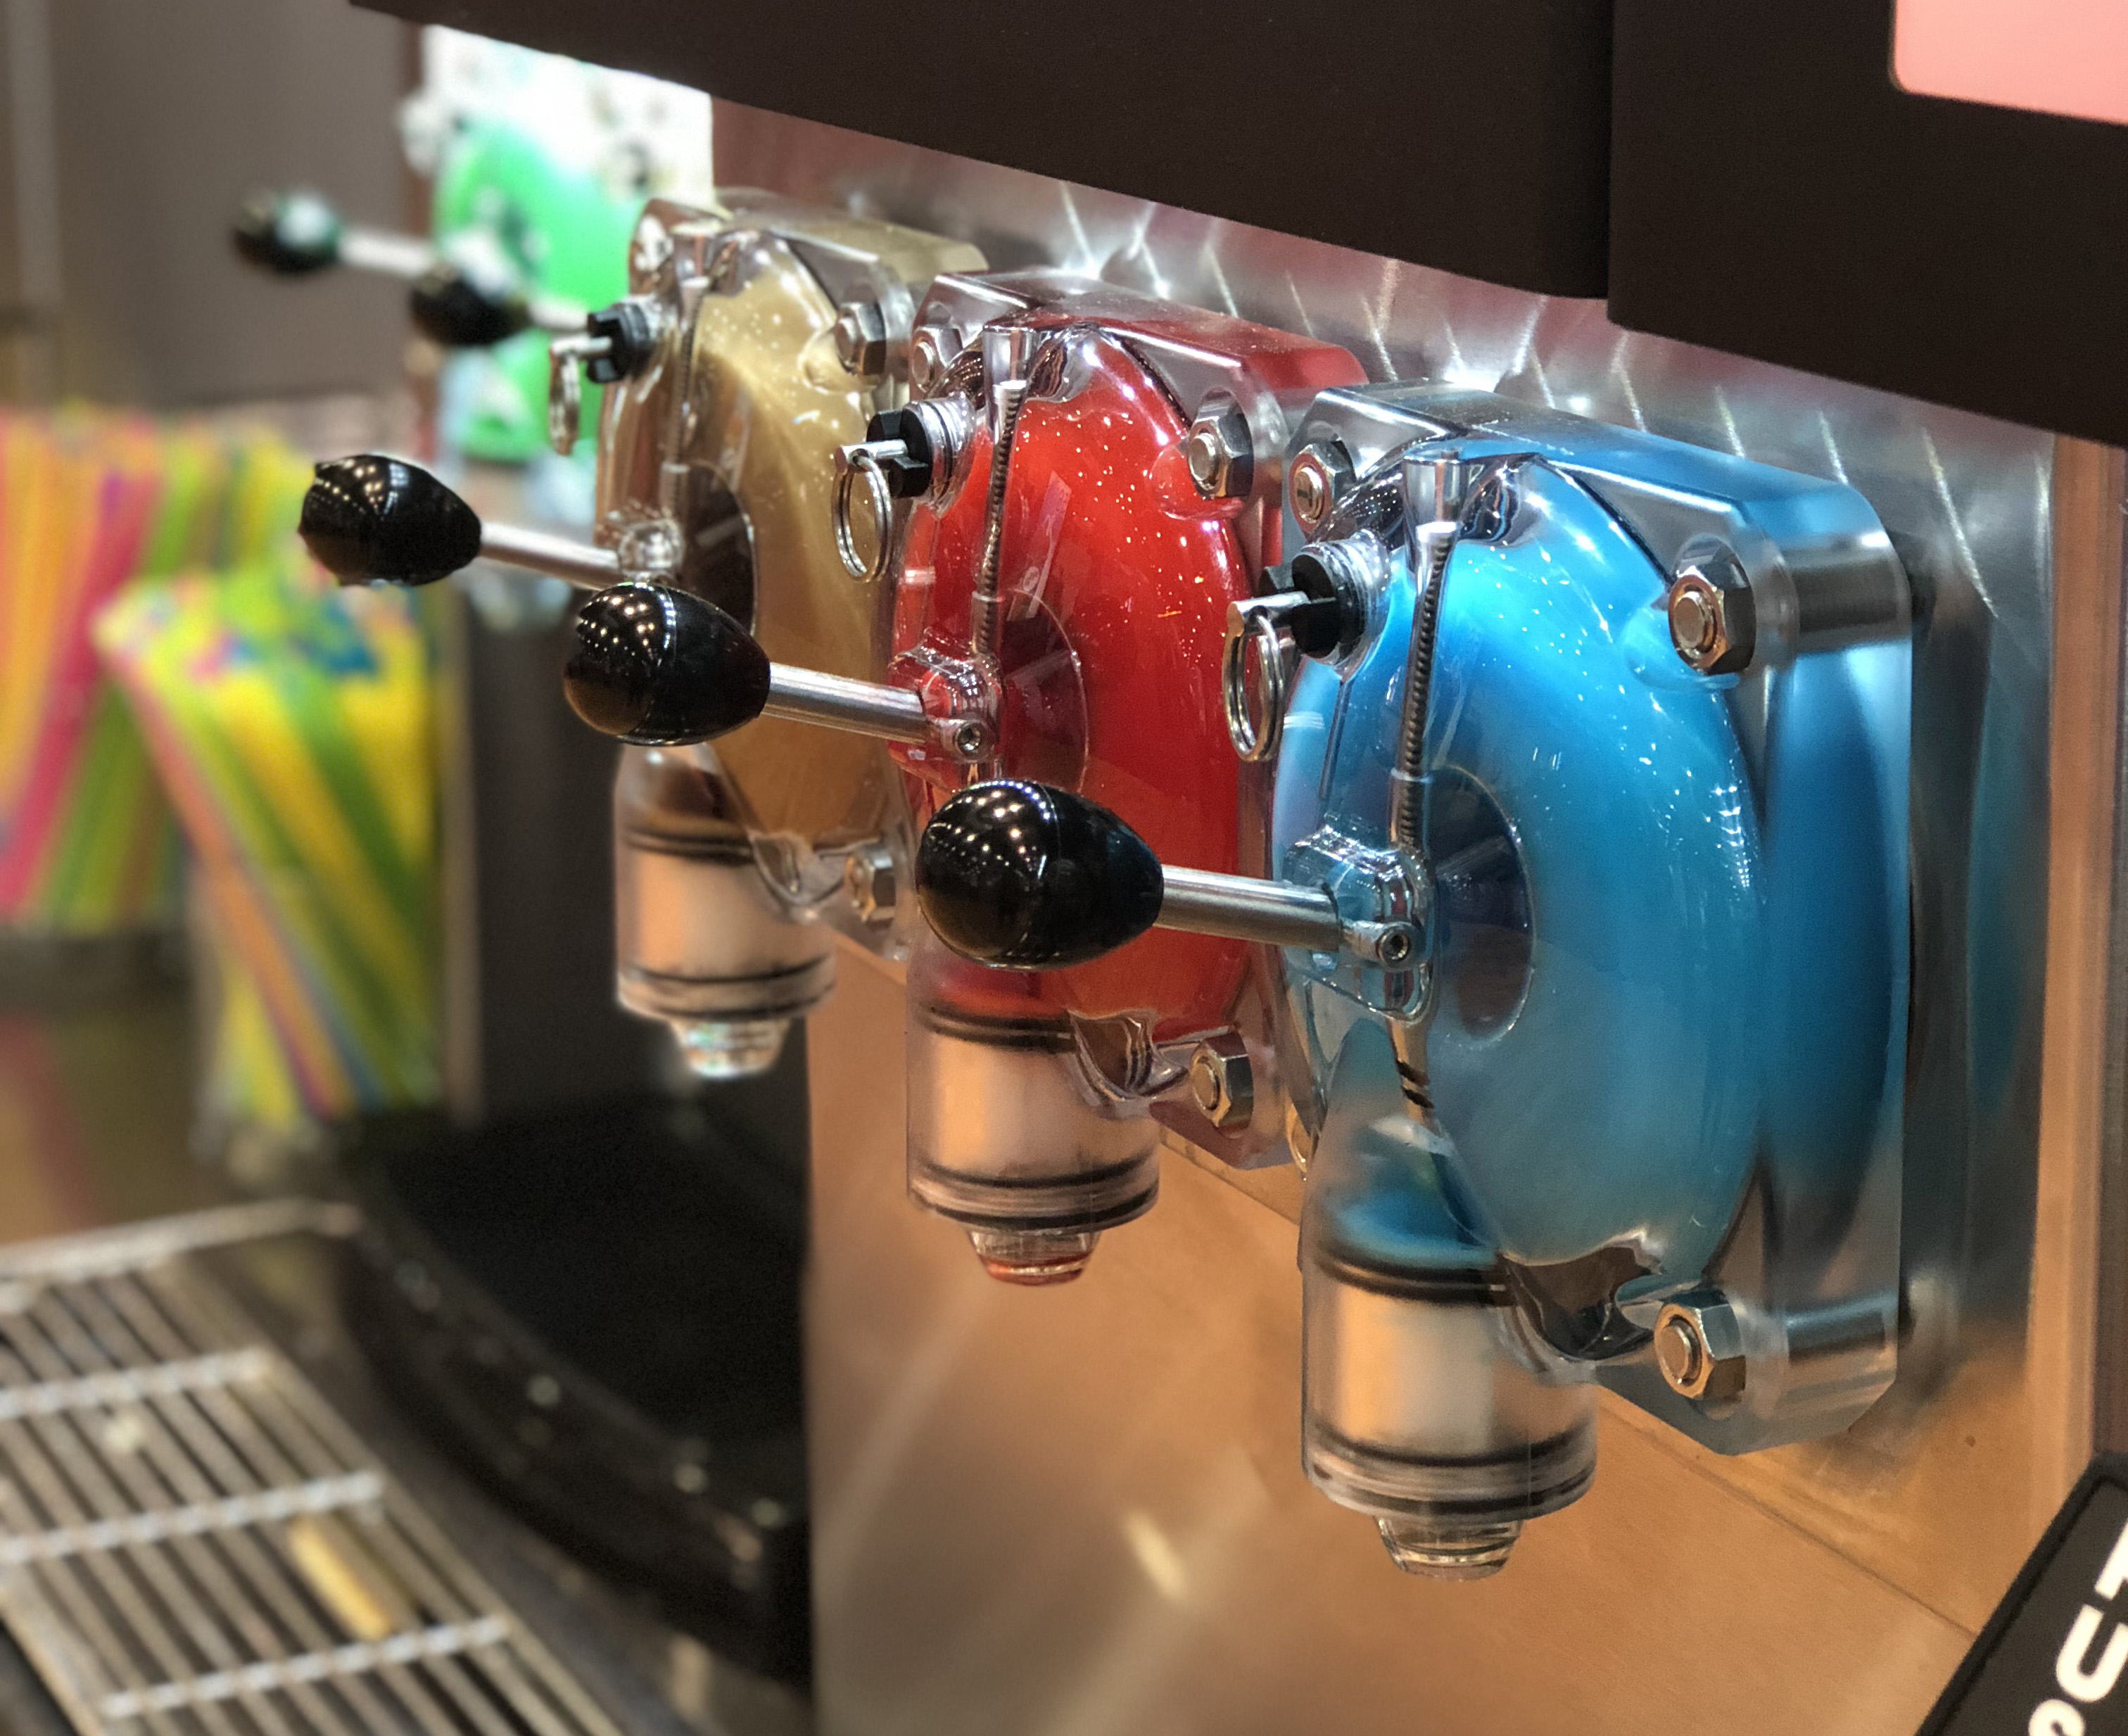 9 Ways to Make Money With a Frozen Drink Machine - featured image